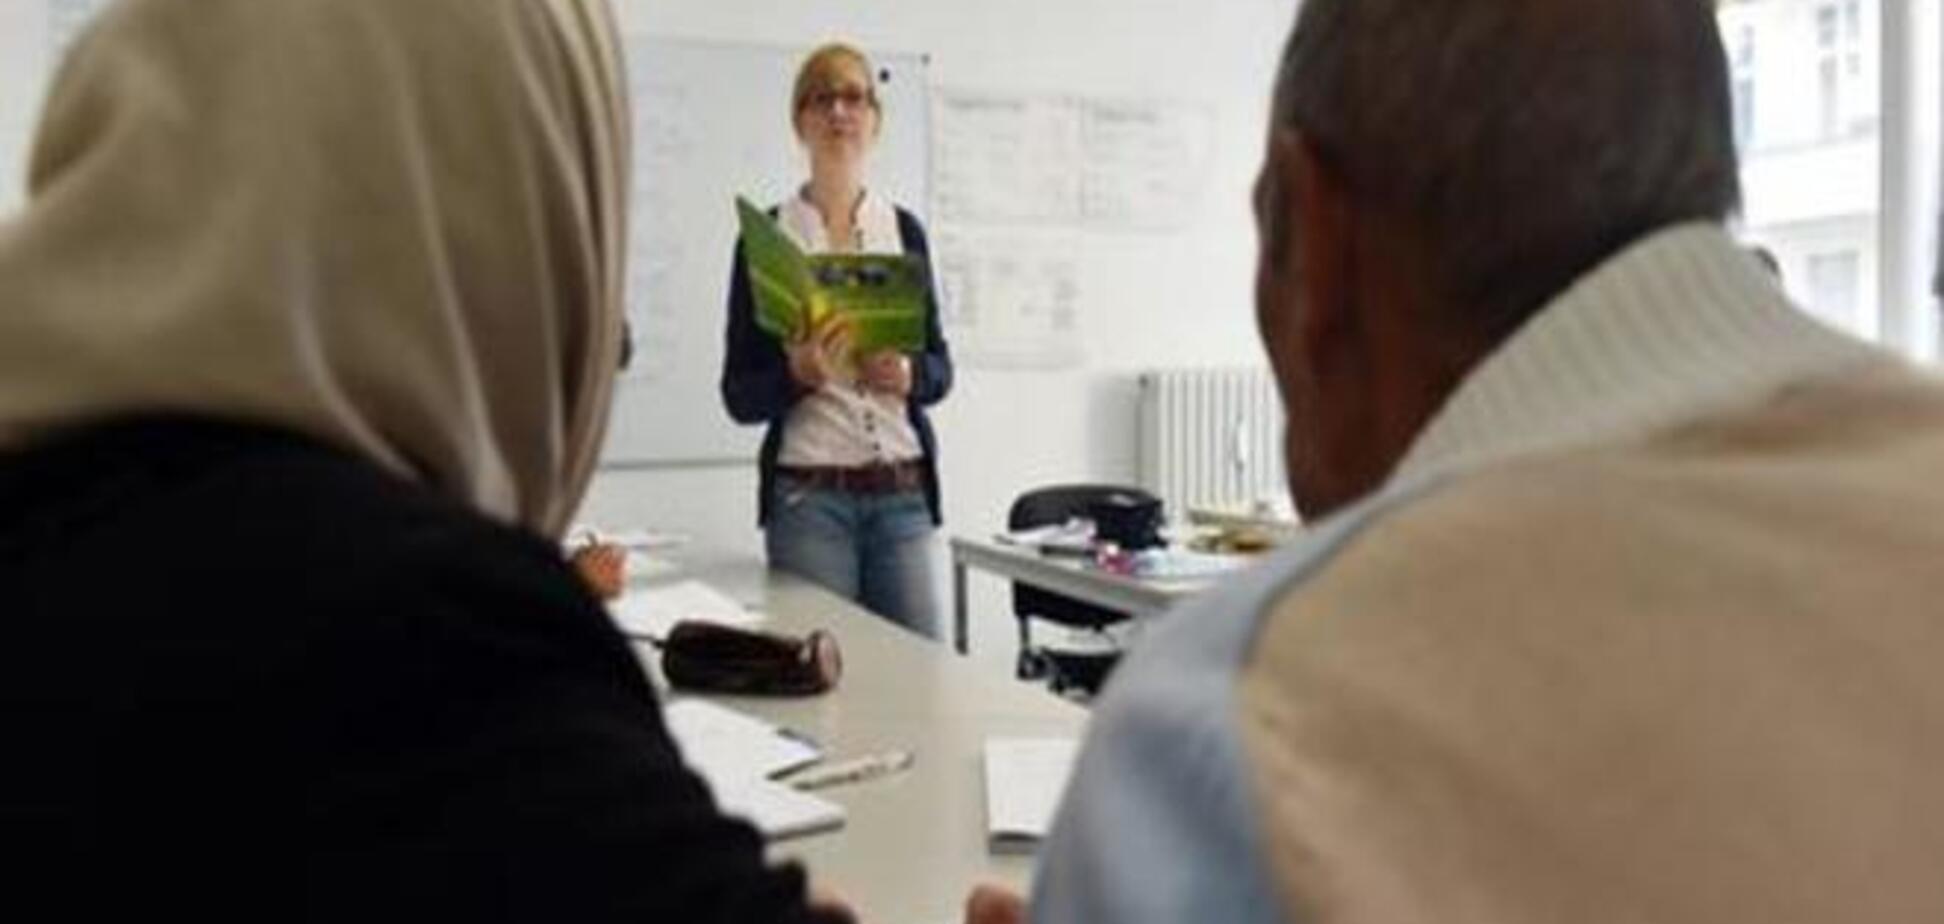 Немецкие СМИ: Необходим диалог о роли ислама в обществе